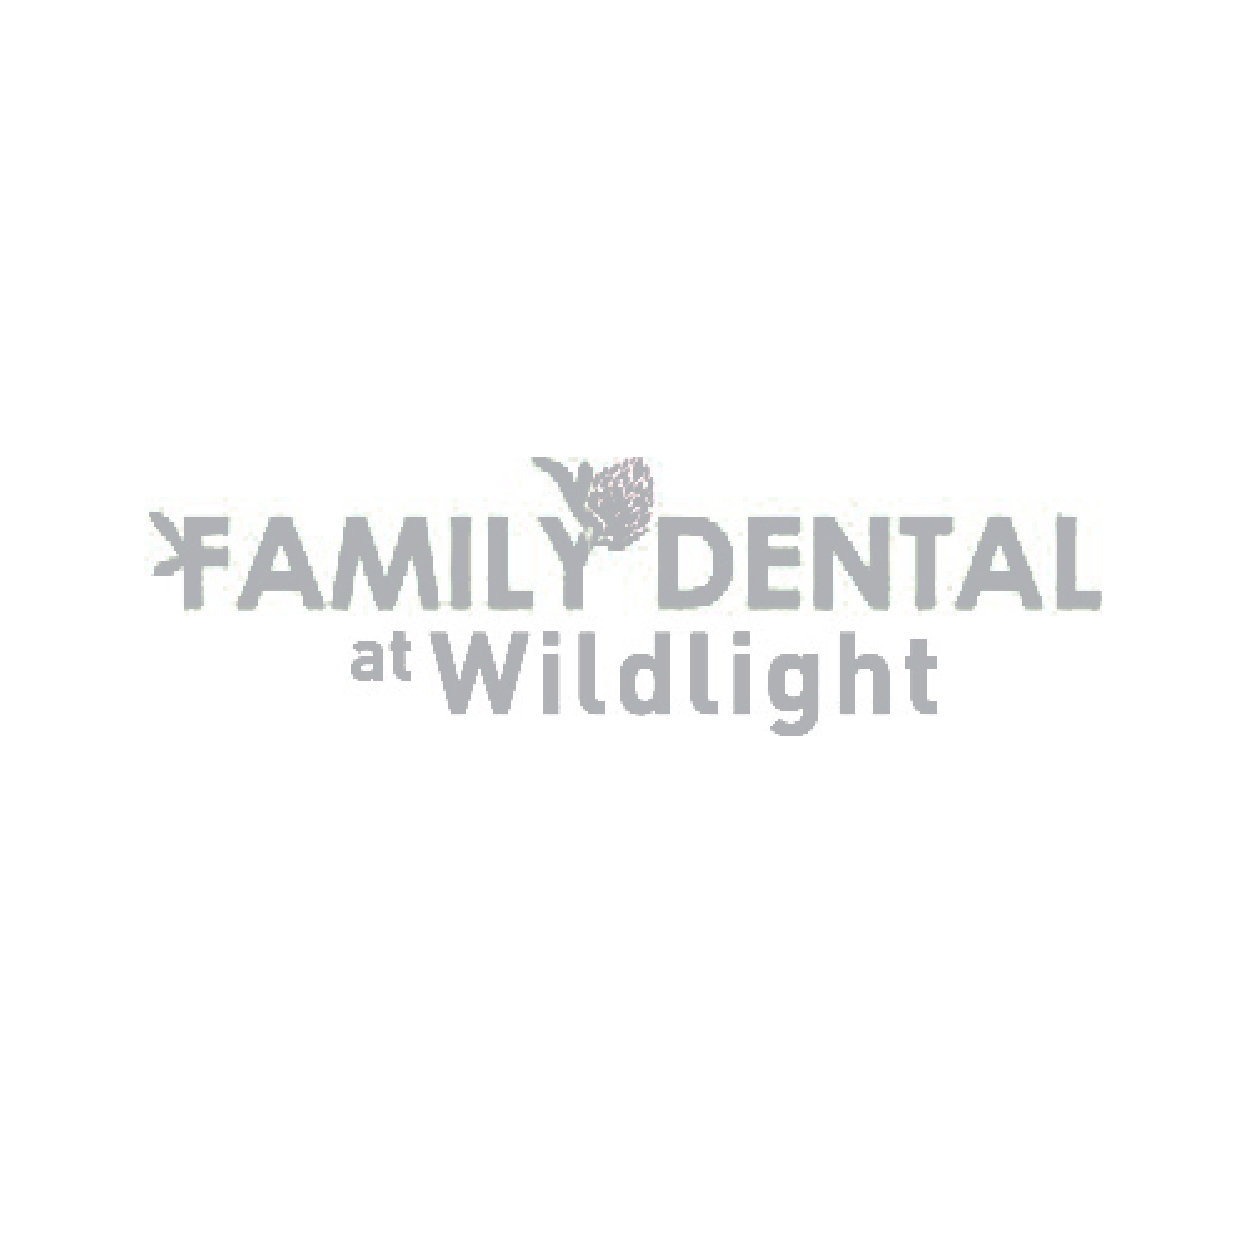 Family Dental at Wildlight logo in gray